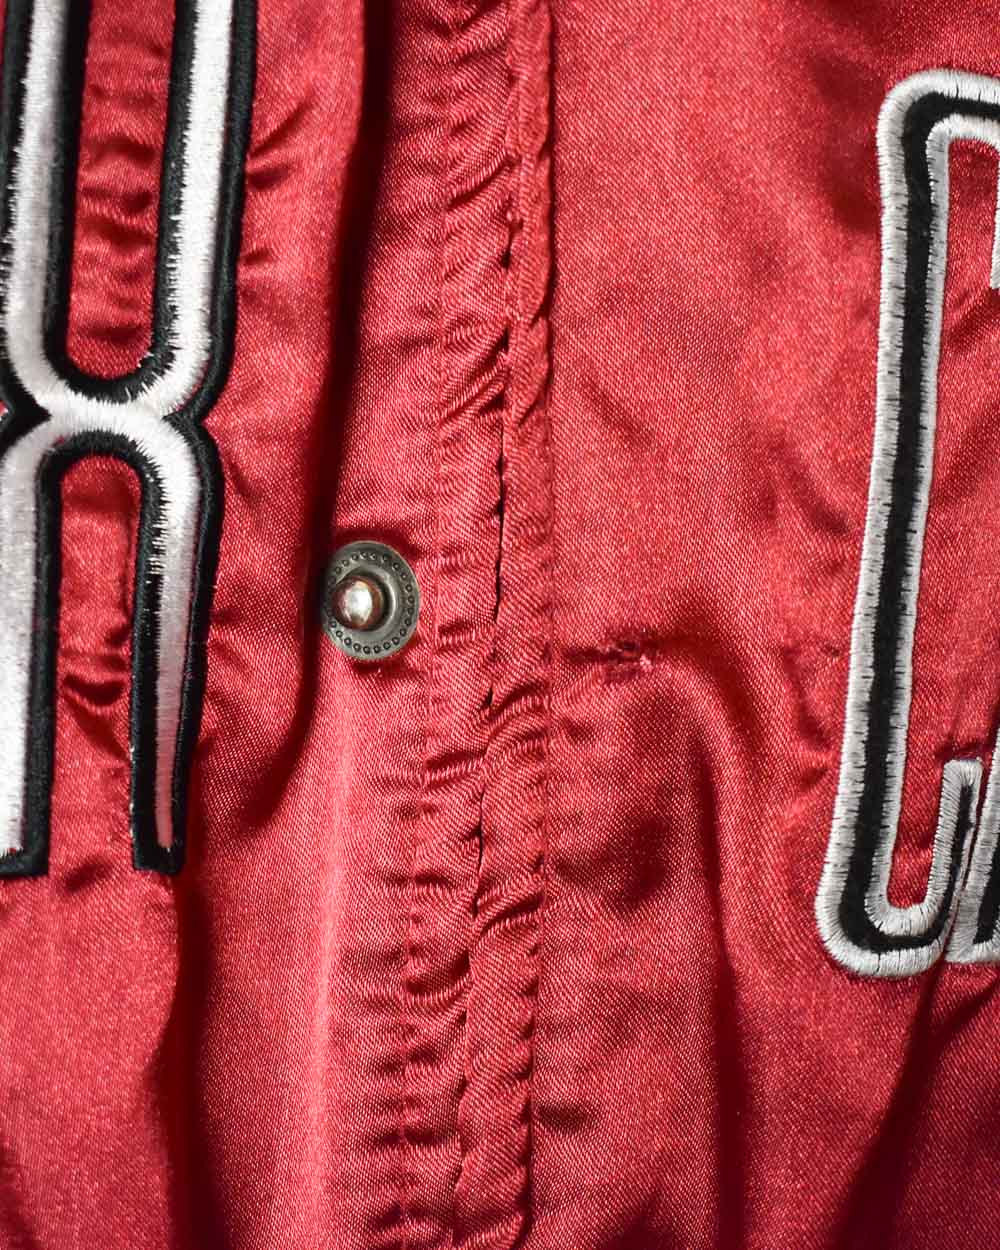 Red NFL Phoenix Cardinals Varsity Jacket - Medium